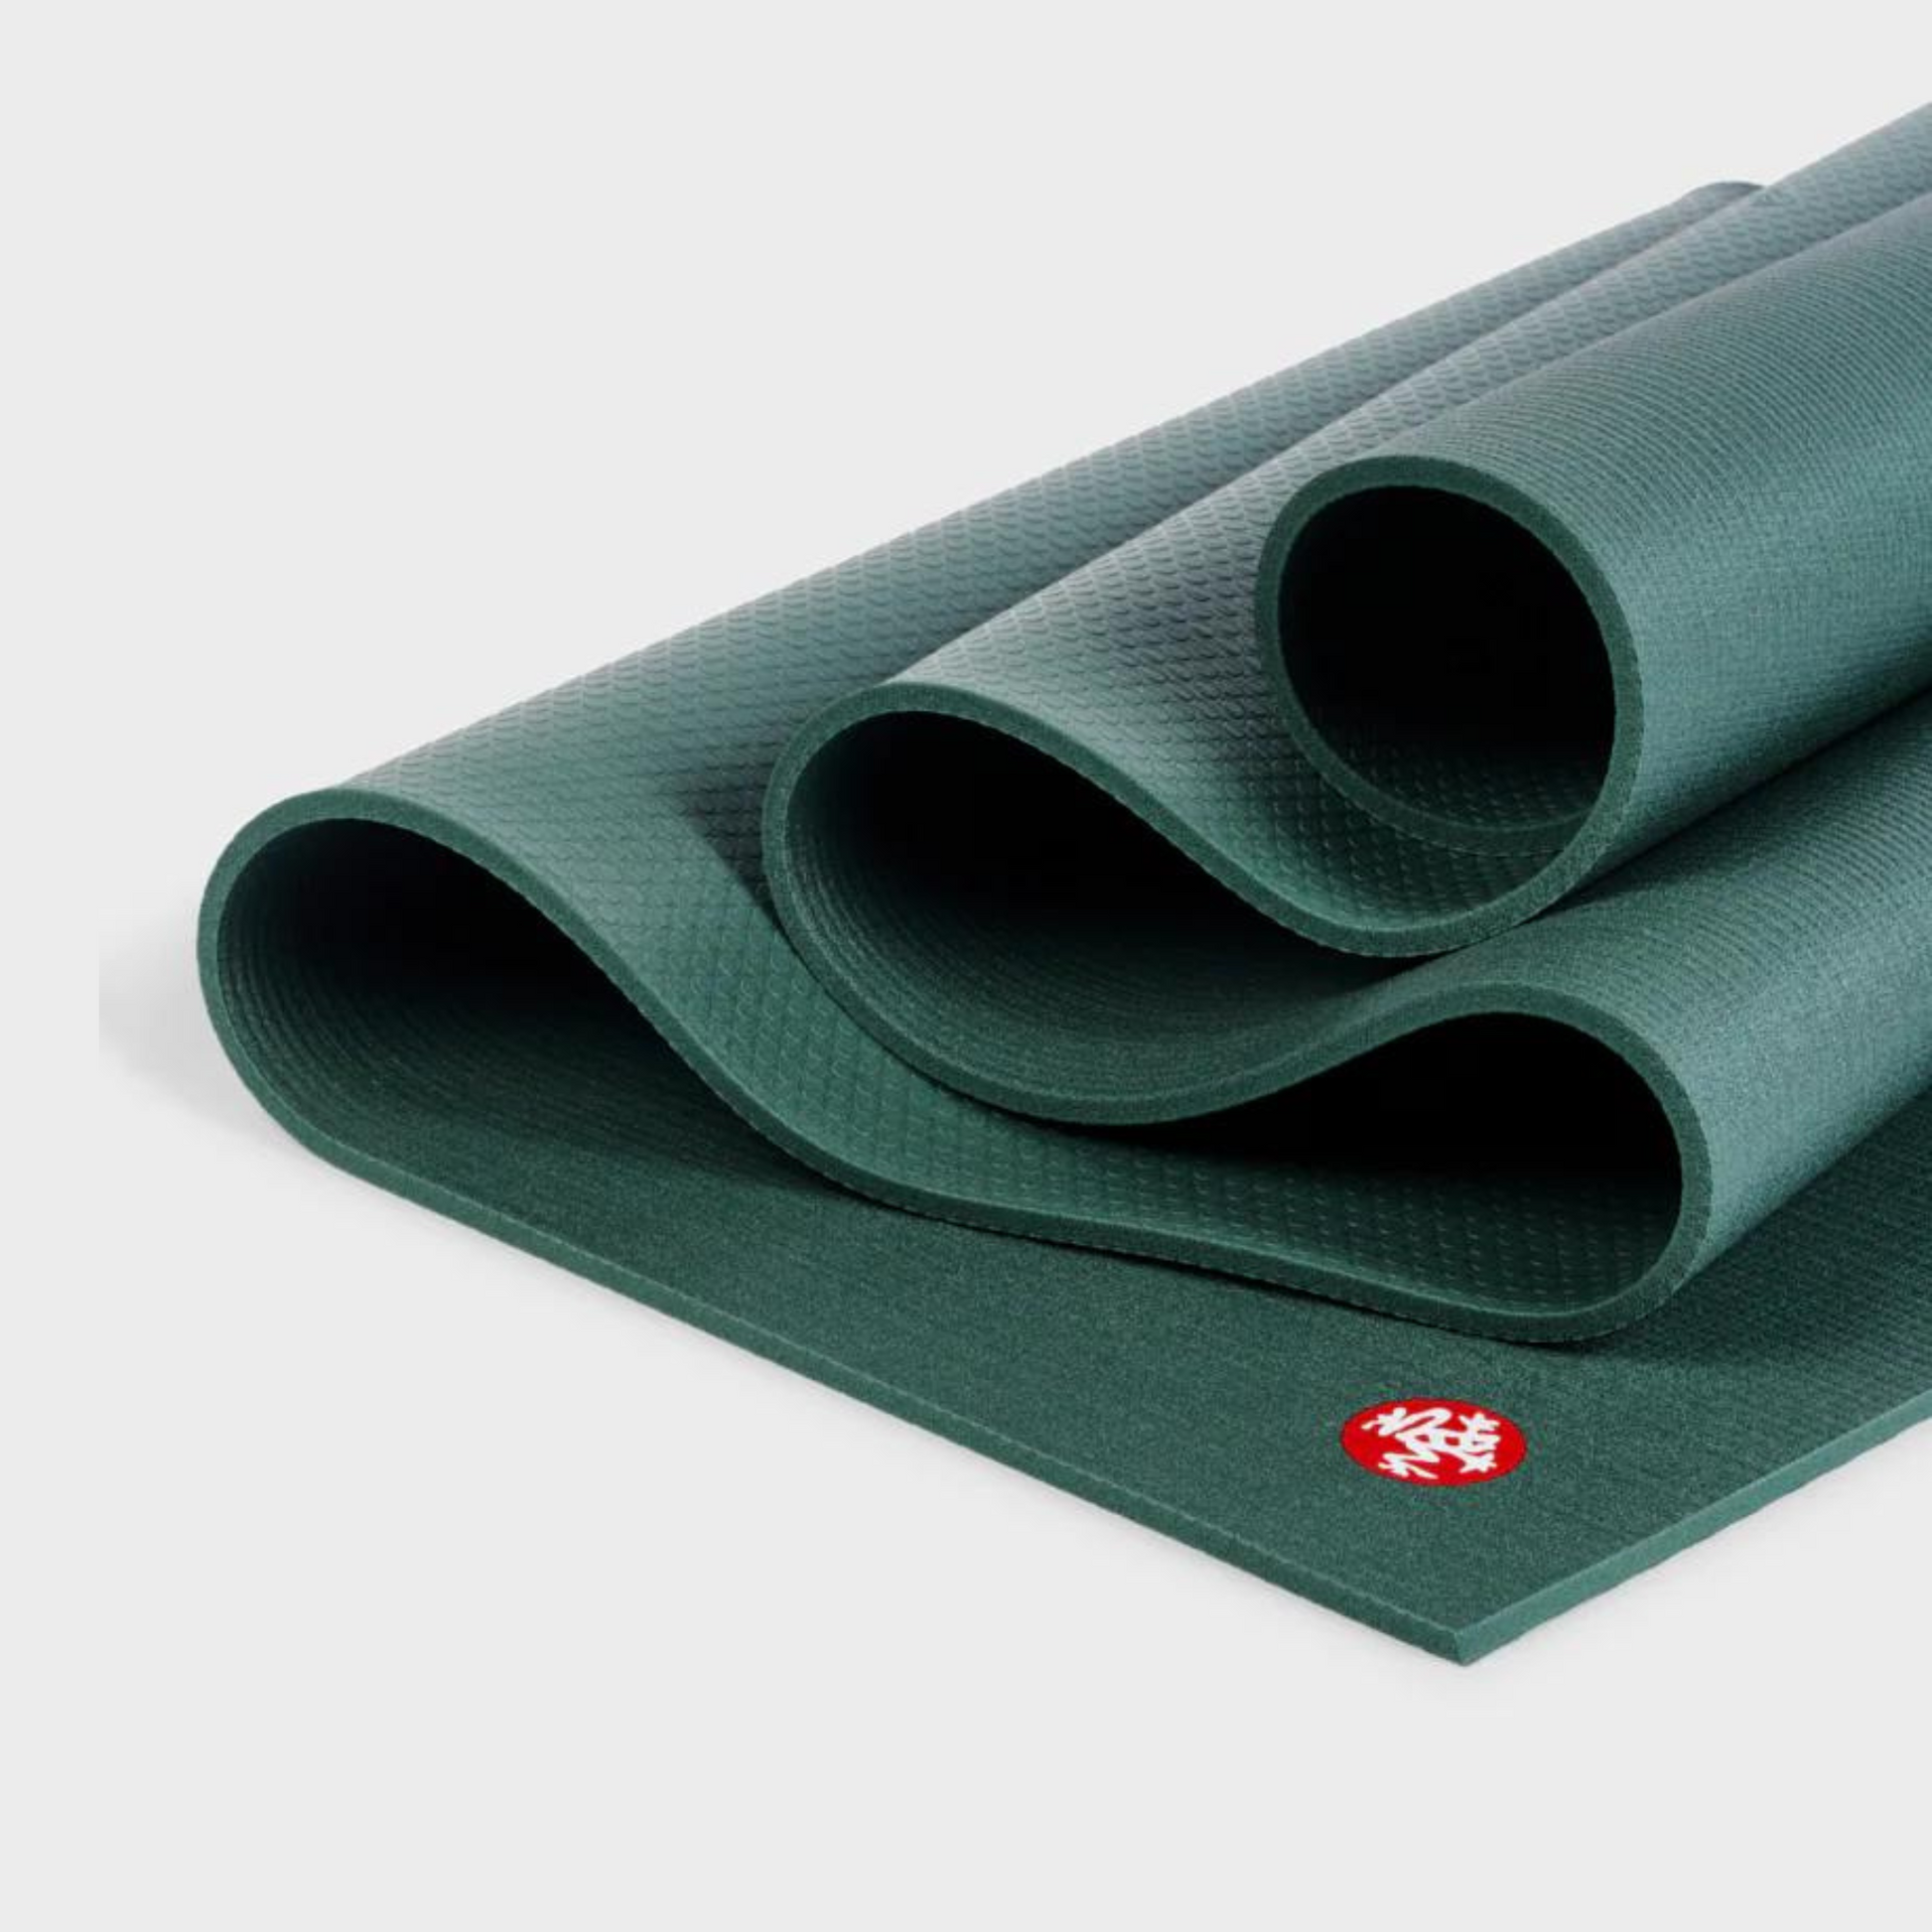 manduka pro yoga mat in black sage in folds